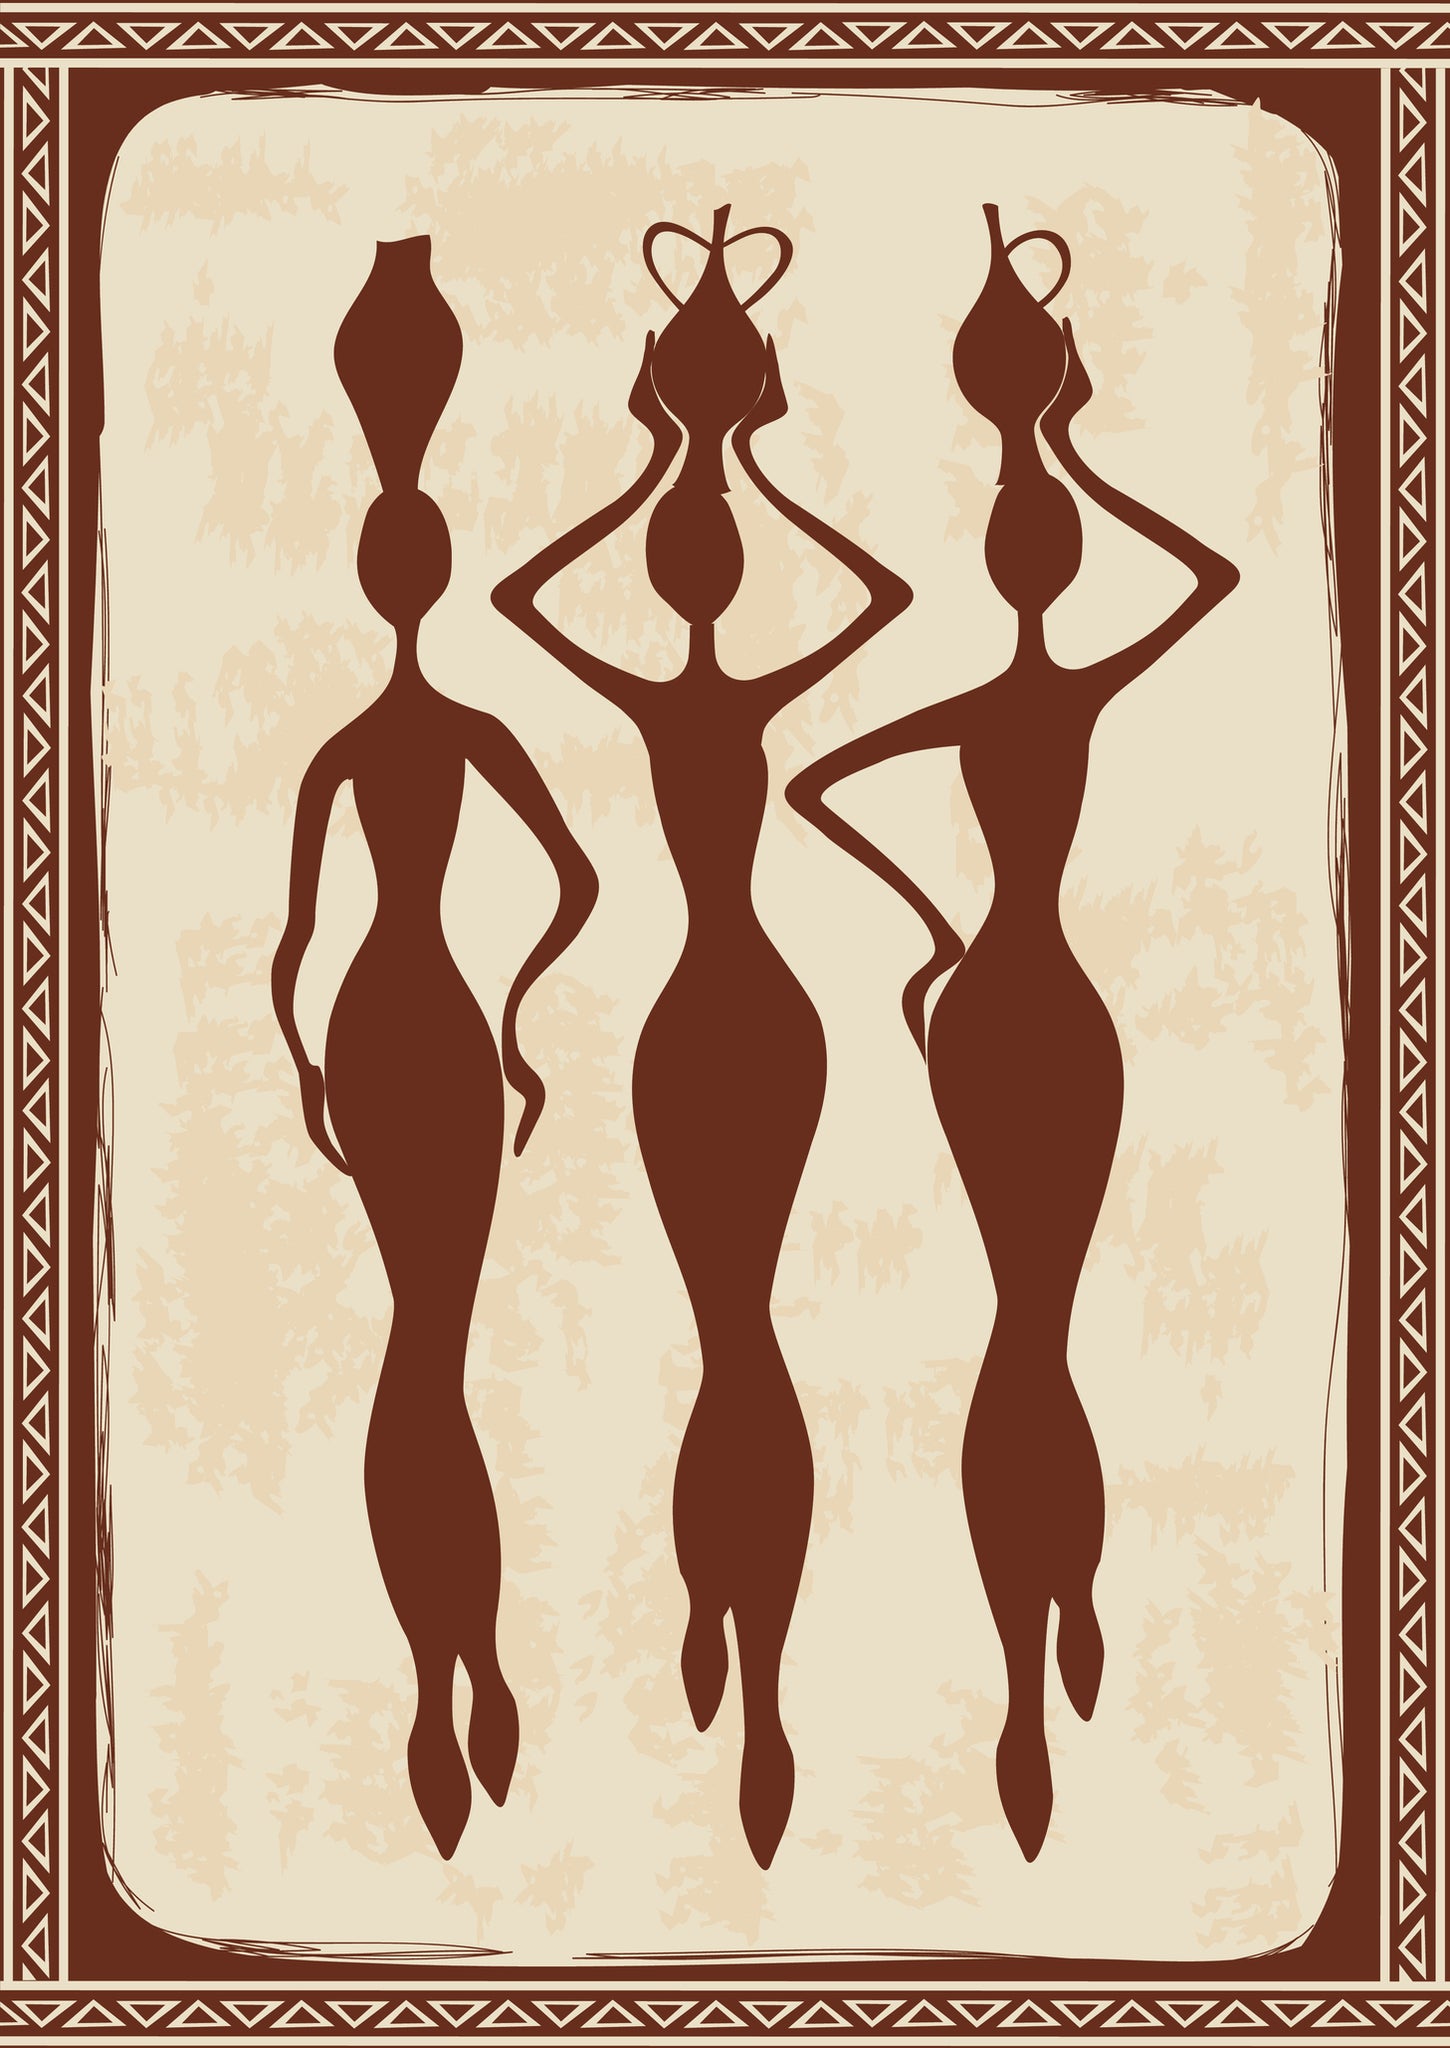 Pretty Ancient Civilization Women with Jars Cartool Silhouette Icon Vinyl Decal Sticker